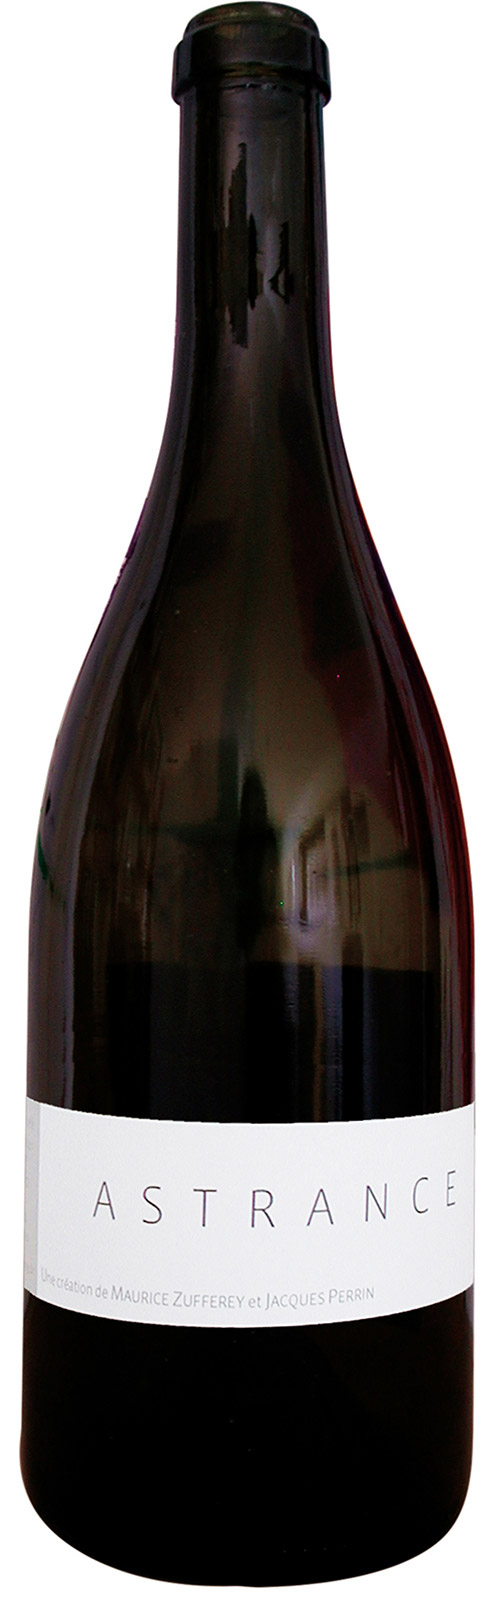 P10 Bt Astrance vins